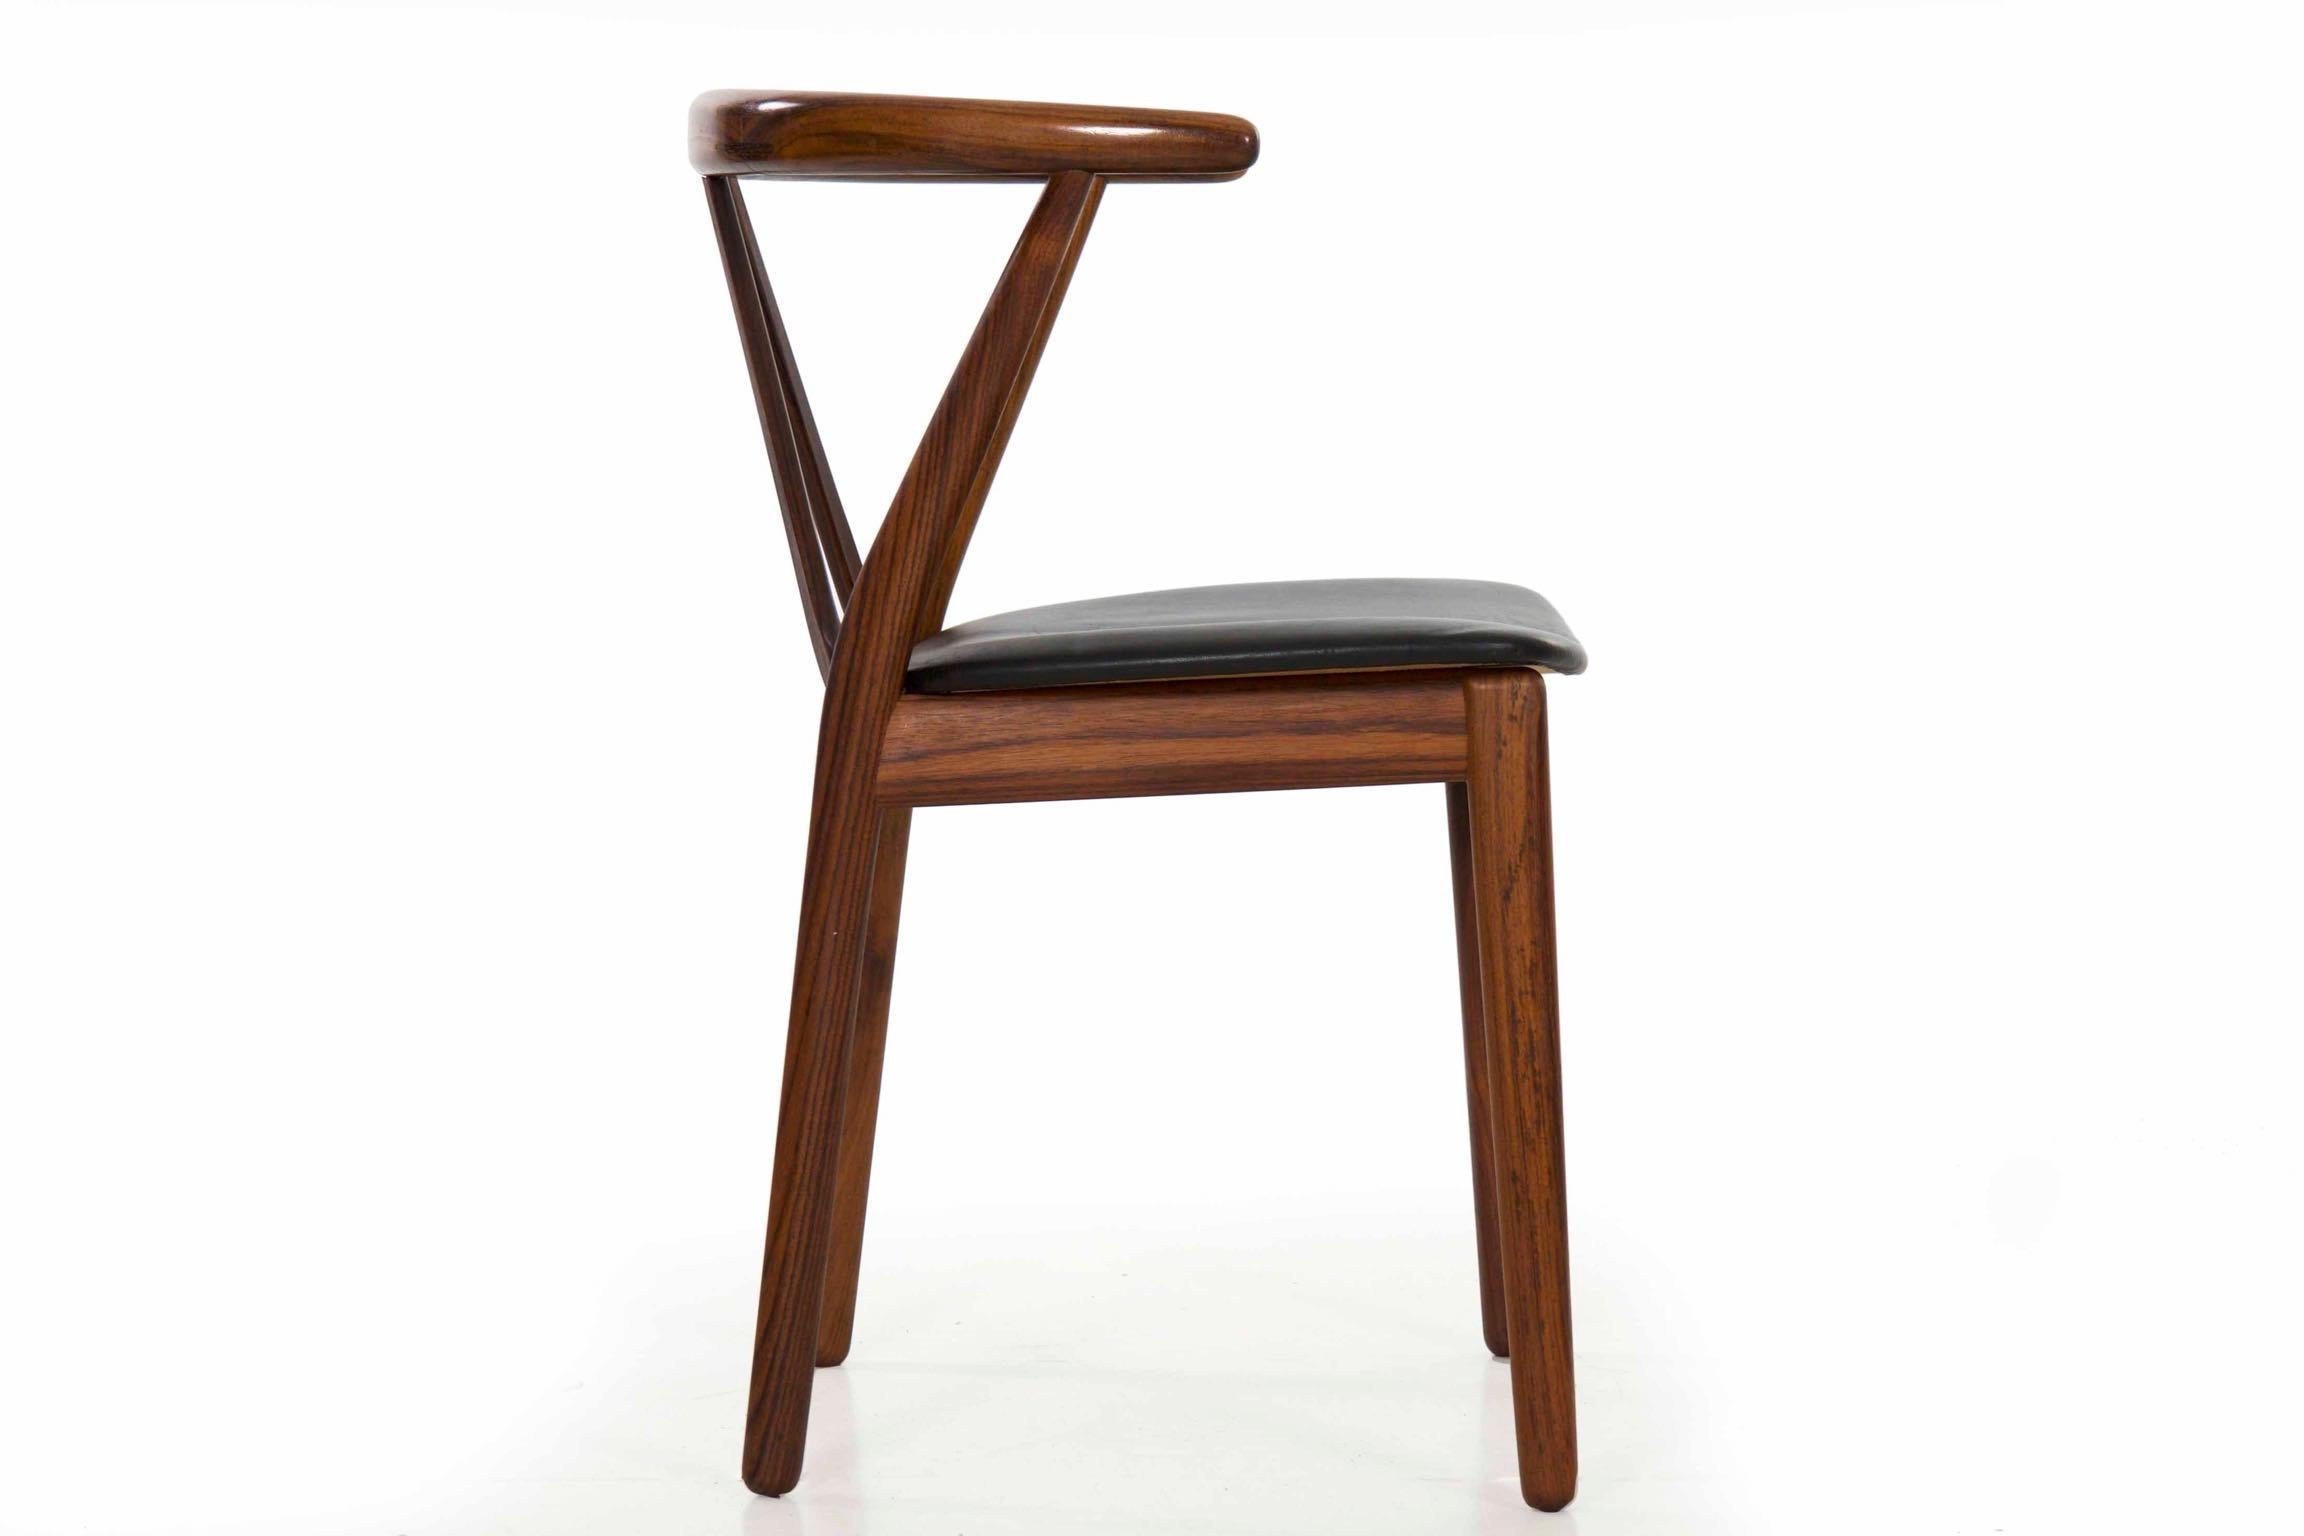 20th Century Midcentury Danish Modern Hoop Back Rosewood Chair by Kjaernulf for Hansen